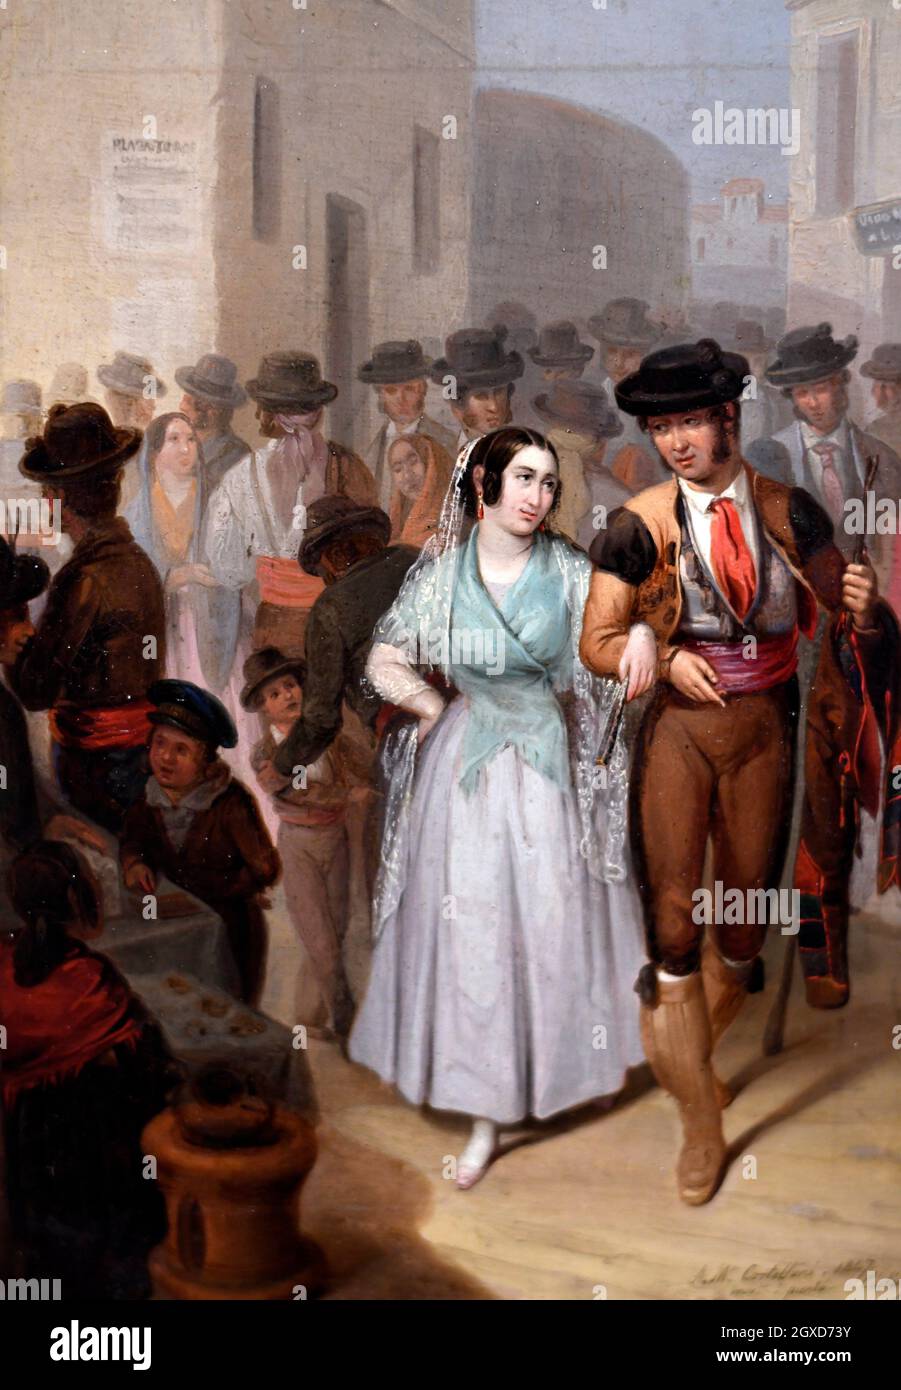 Salida de la plaza. Leaving the Bullring, 1847, Angel Maria Cortellini Hernandez, Carmen Thyssen Museum, Malaga, Andalusia,Spain. Stock Photo